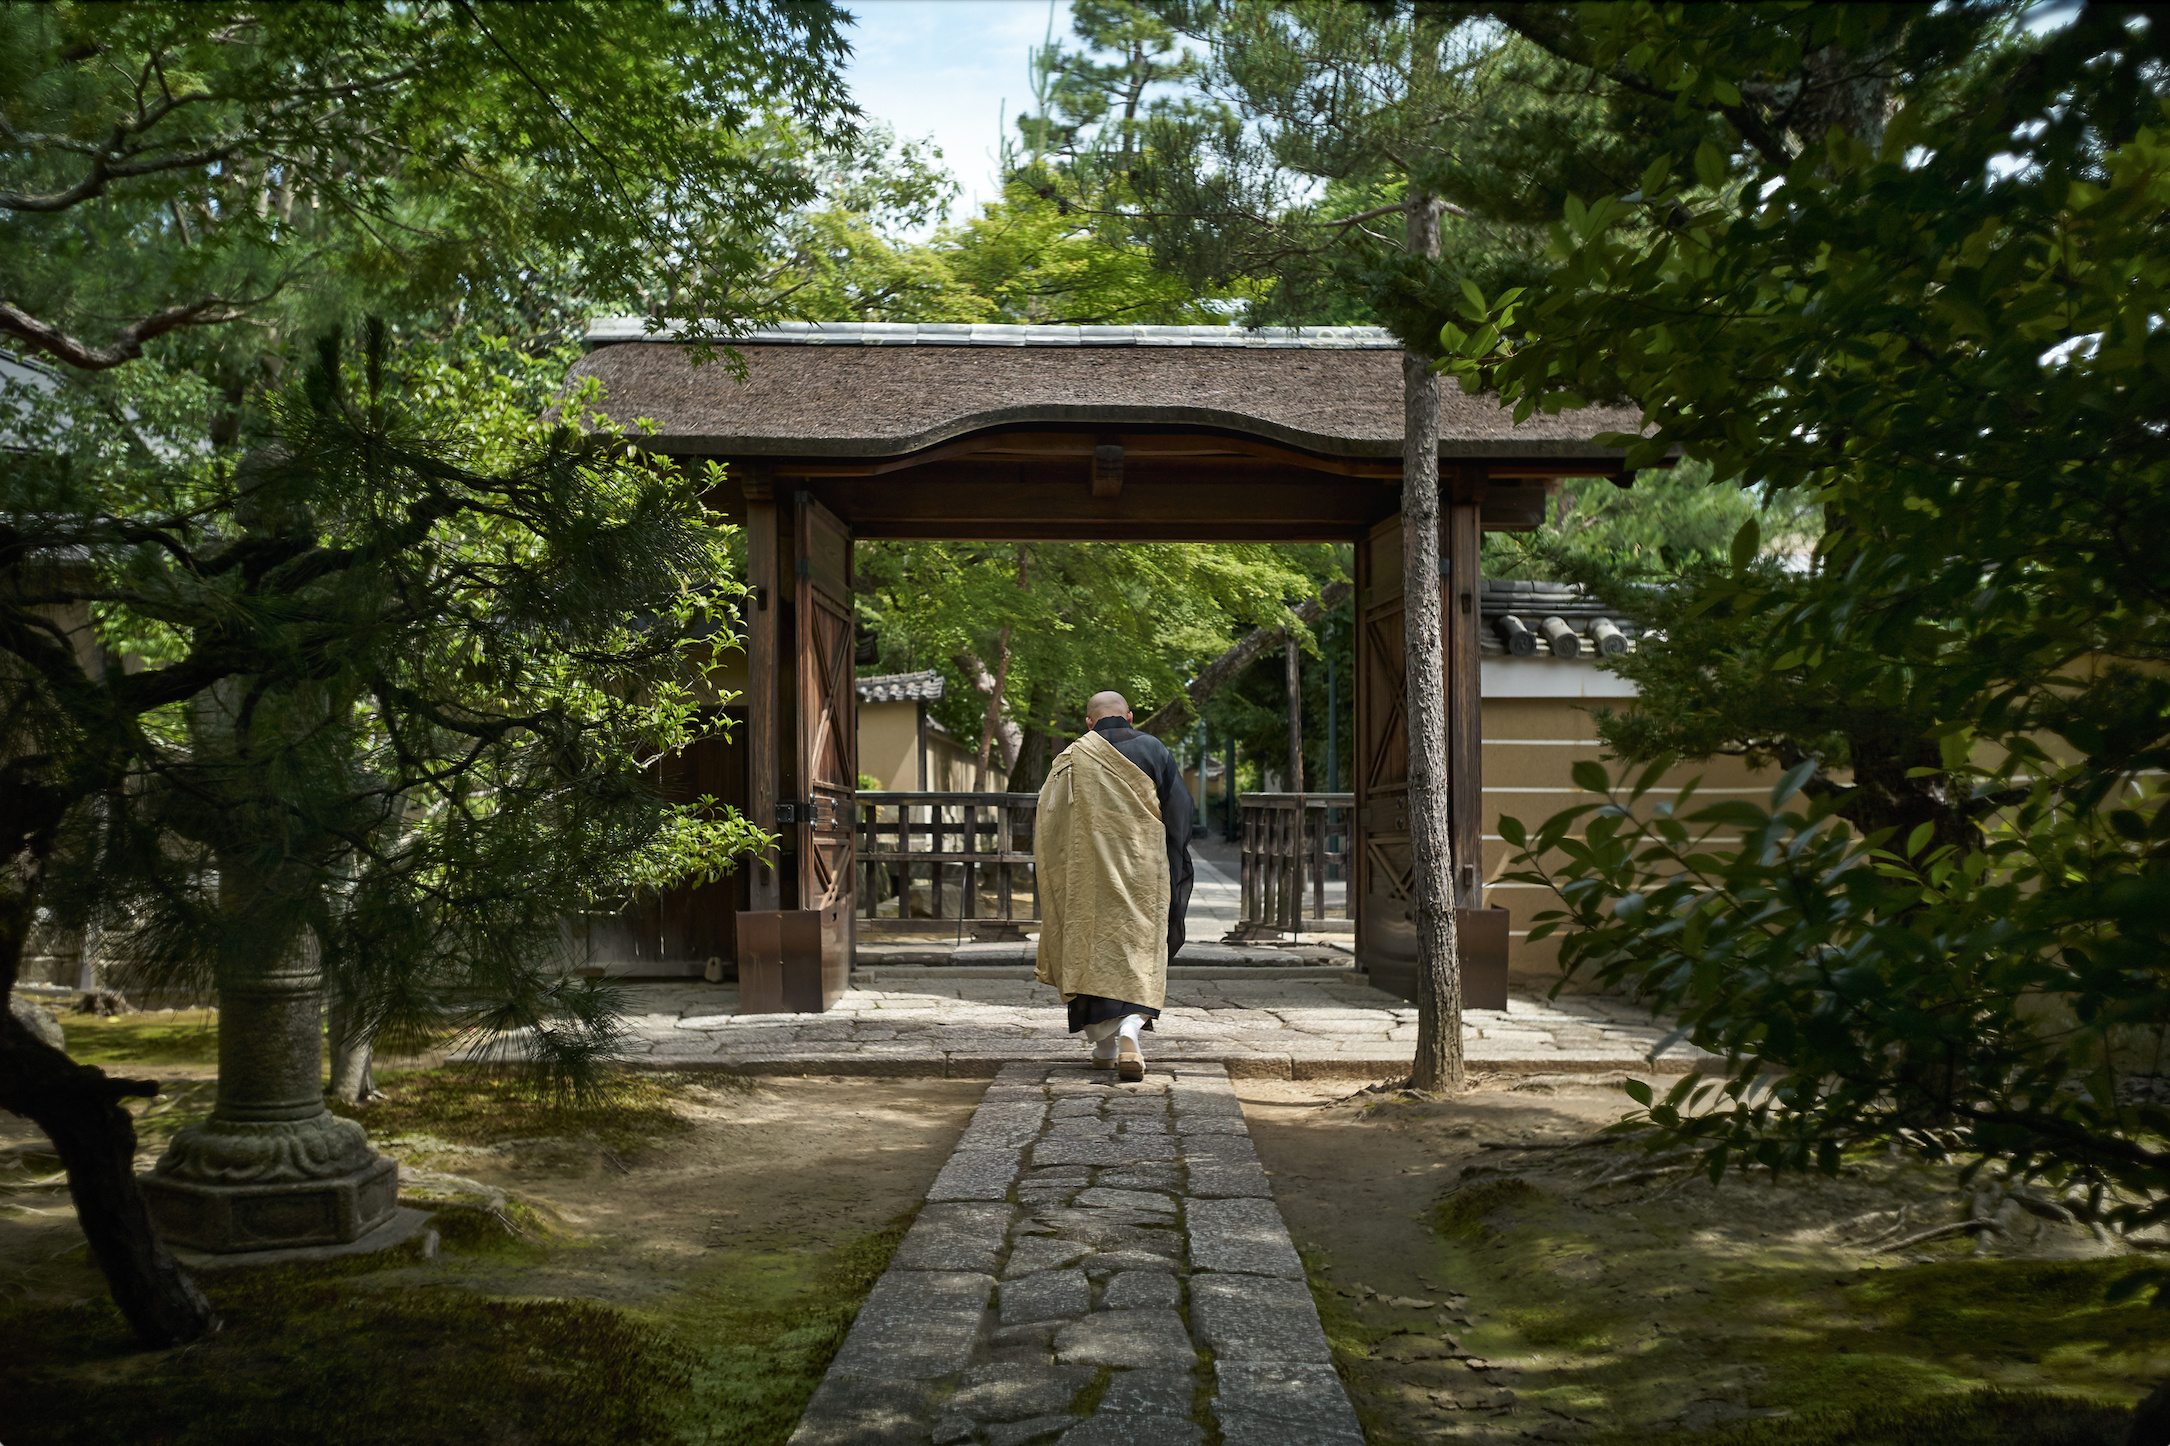 Man in robe walks down stone path under gateway, lush trees surrounding